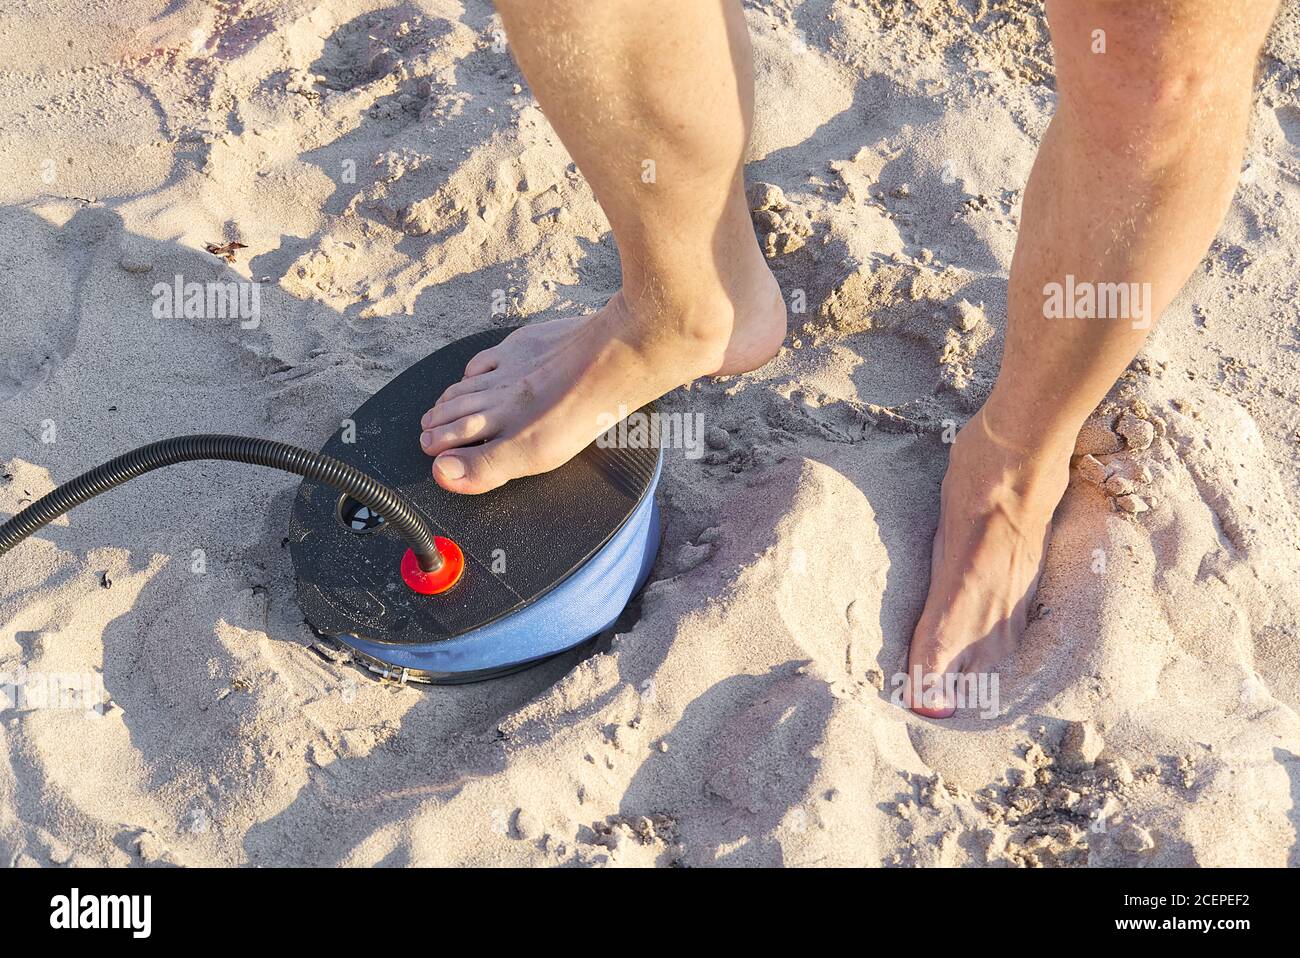 A Man with air foot pump pumps an inflatable mattress or air bed at sandy  beach. Foot inflates air mattress with foot pump on sand Stock Photo - Alamy